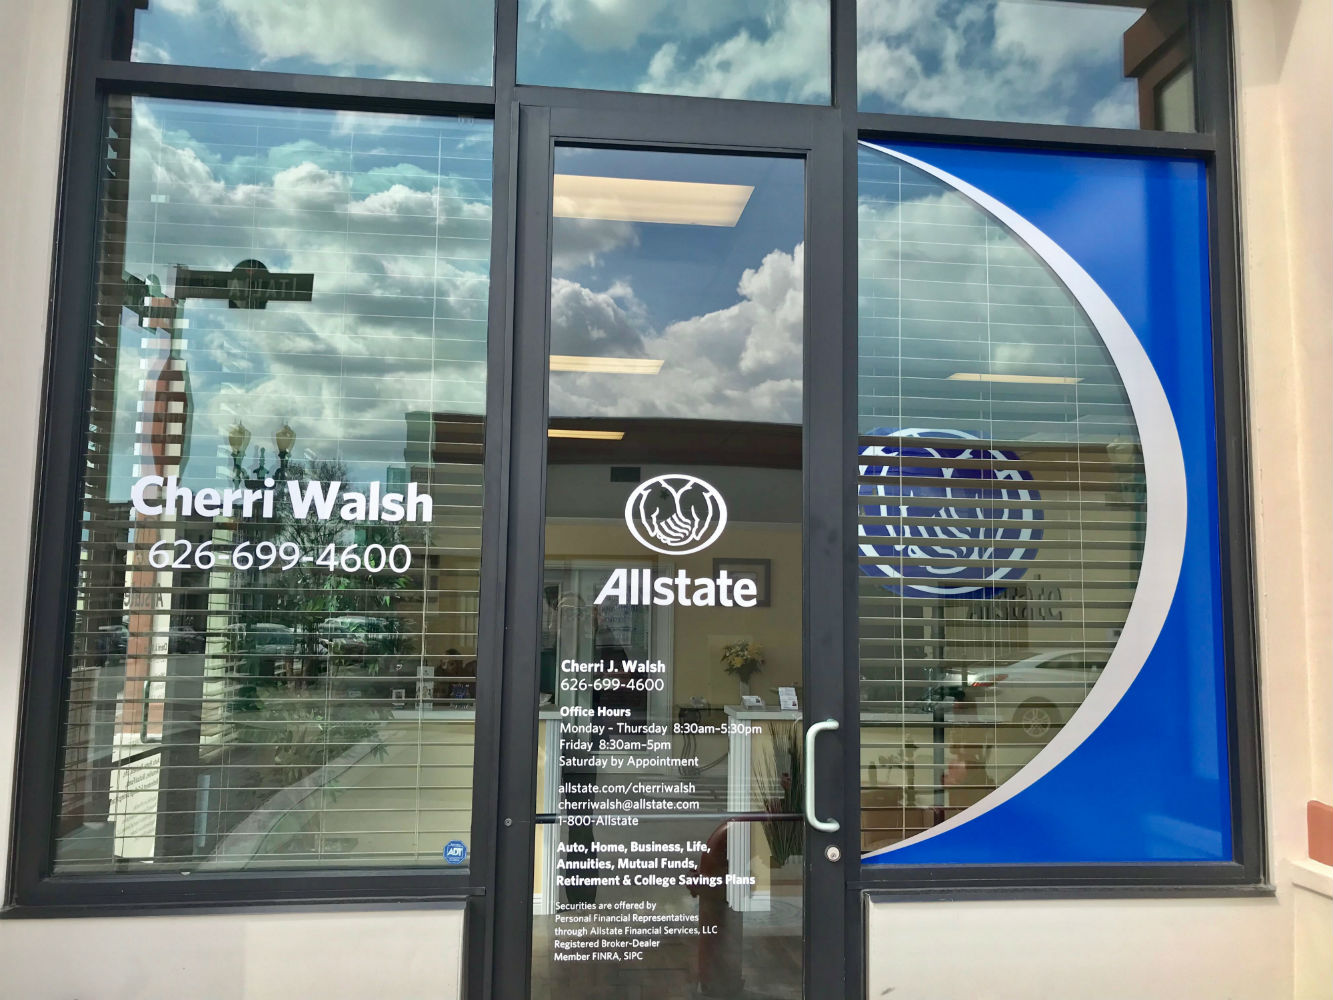 Cherri Walsh: Allstate Insurance Photo